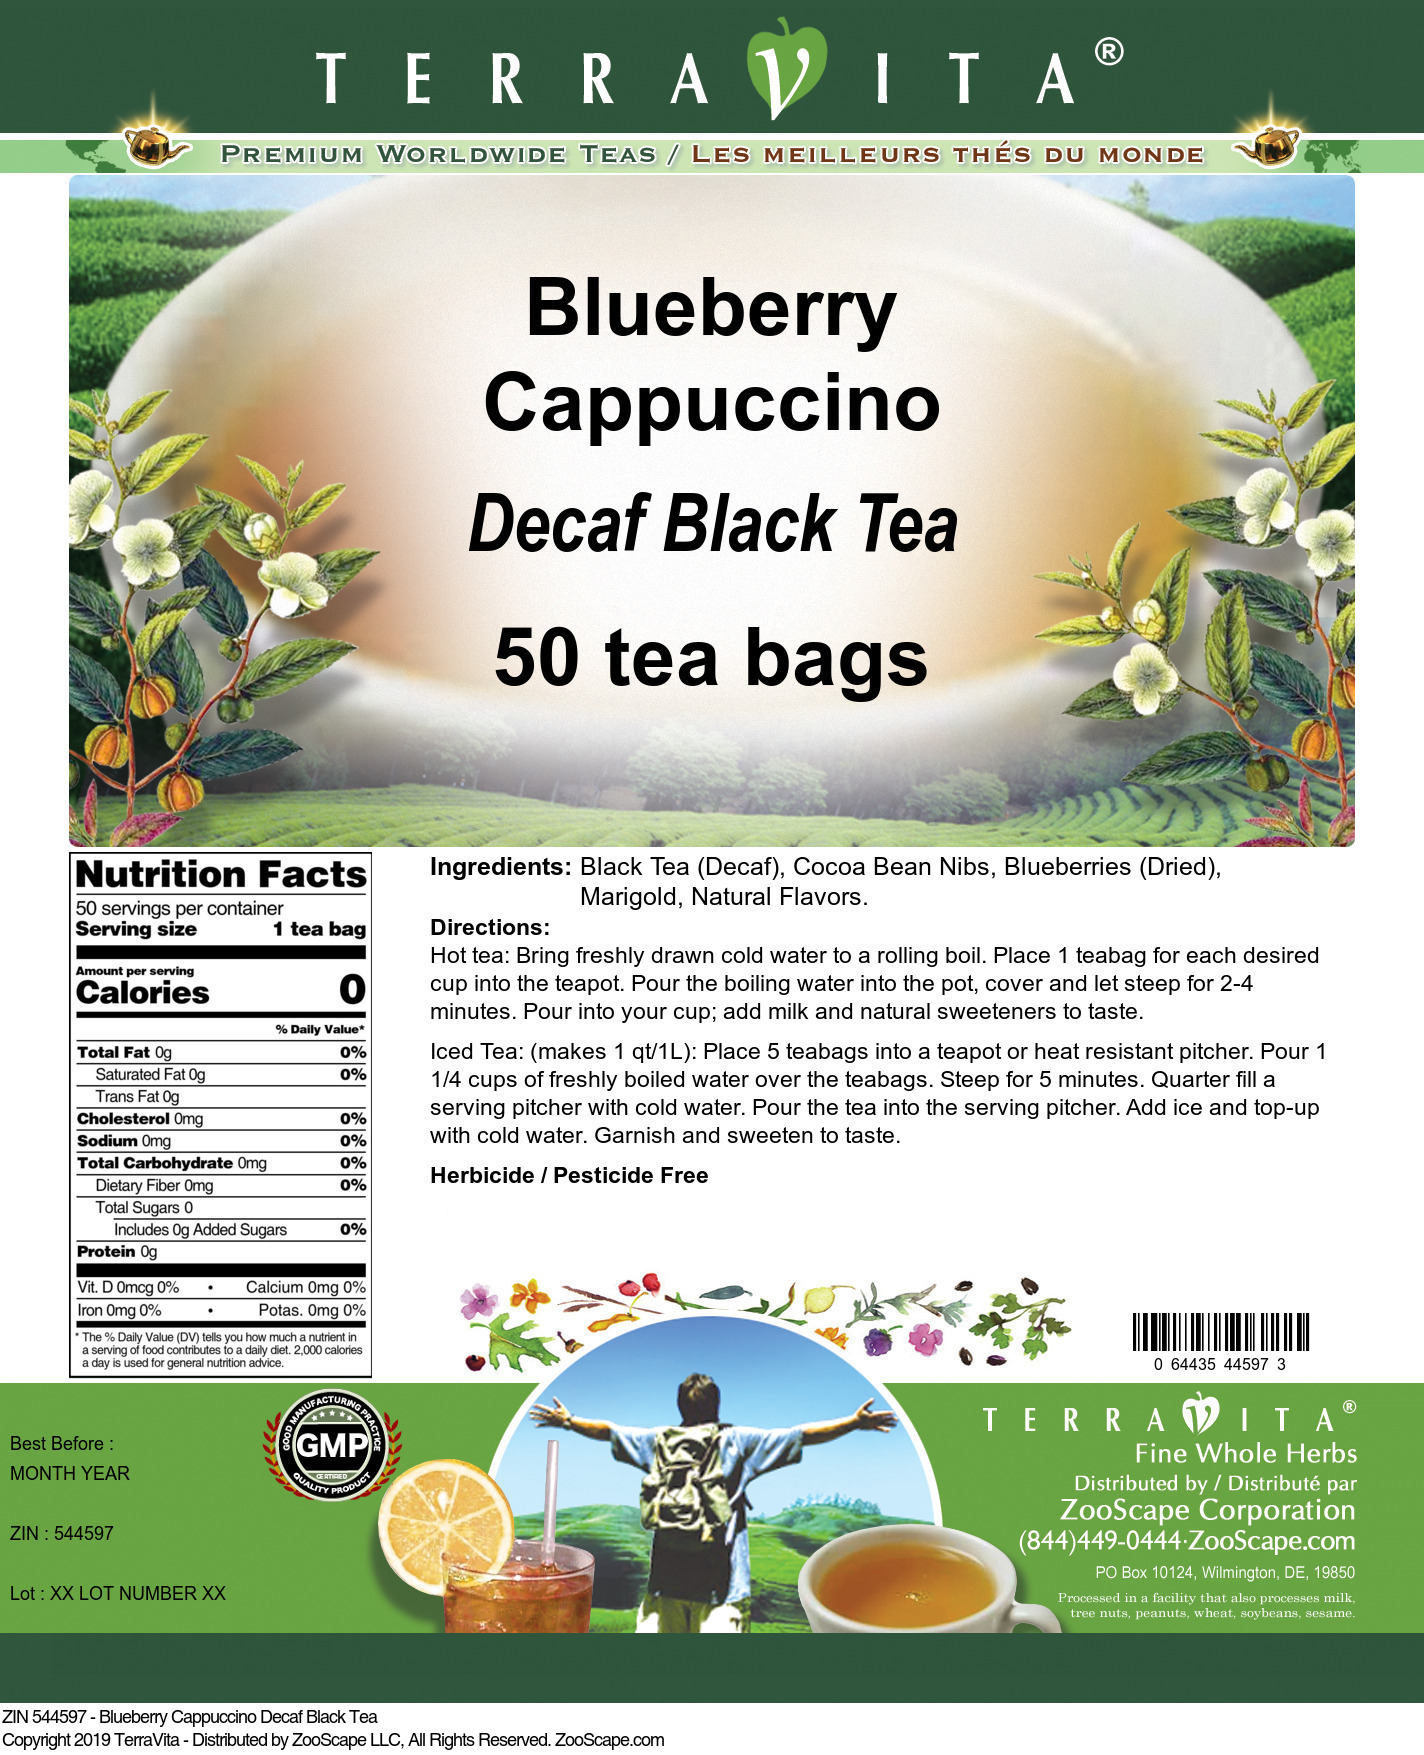 Blueberry Cappuccino Decaf Black Tea - Label